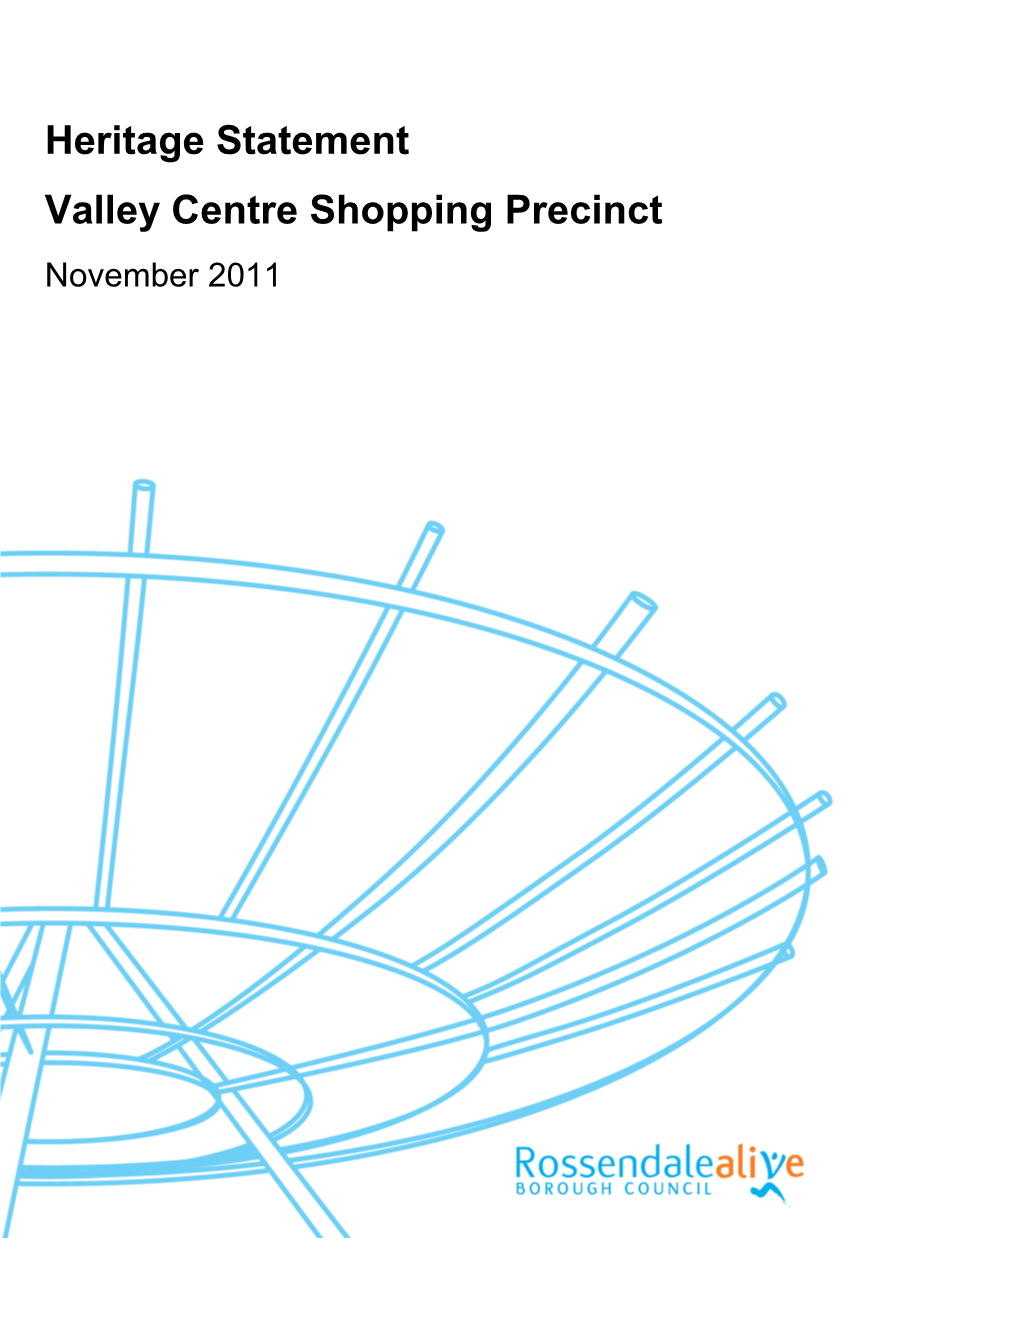 Heritage Statement Valley Centre Shopping Precinct November 2011